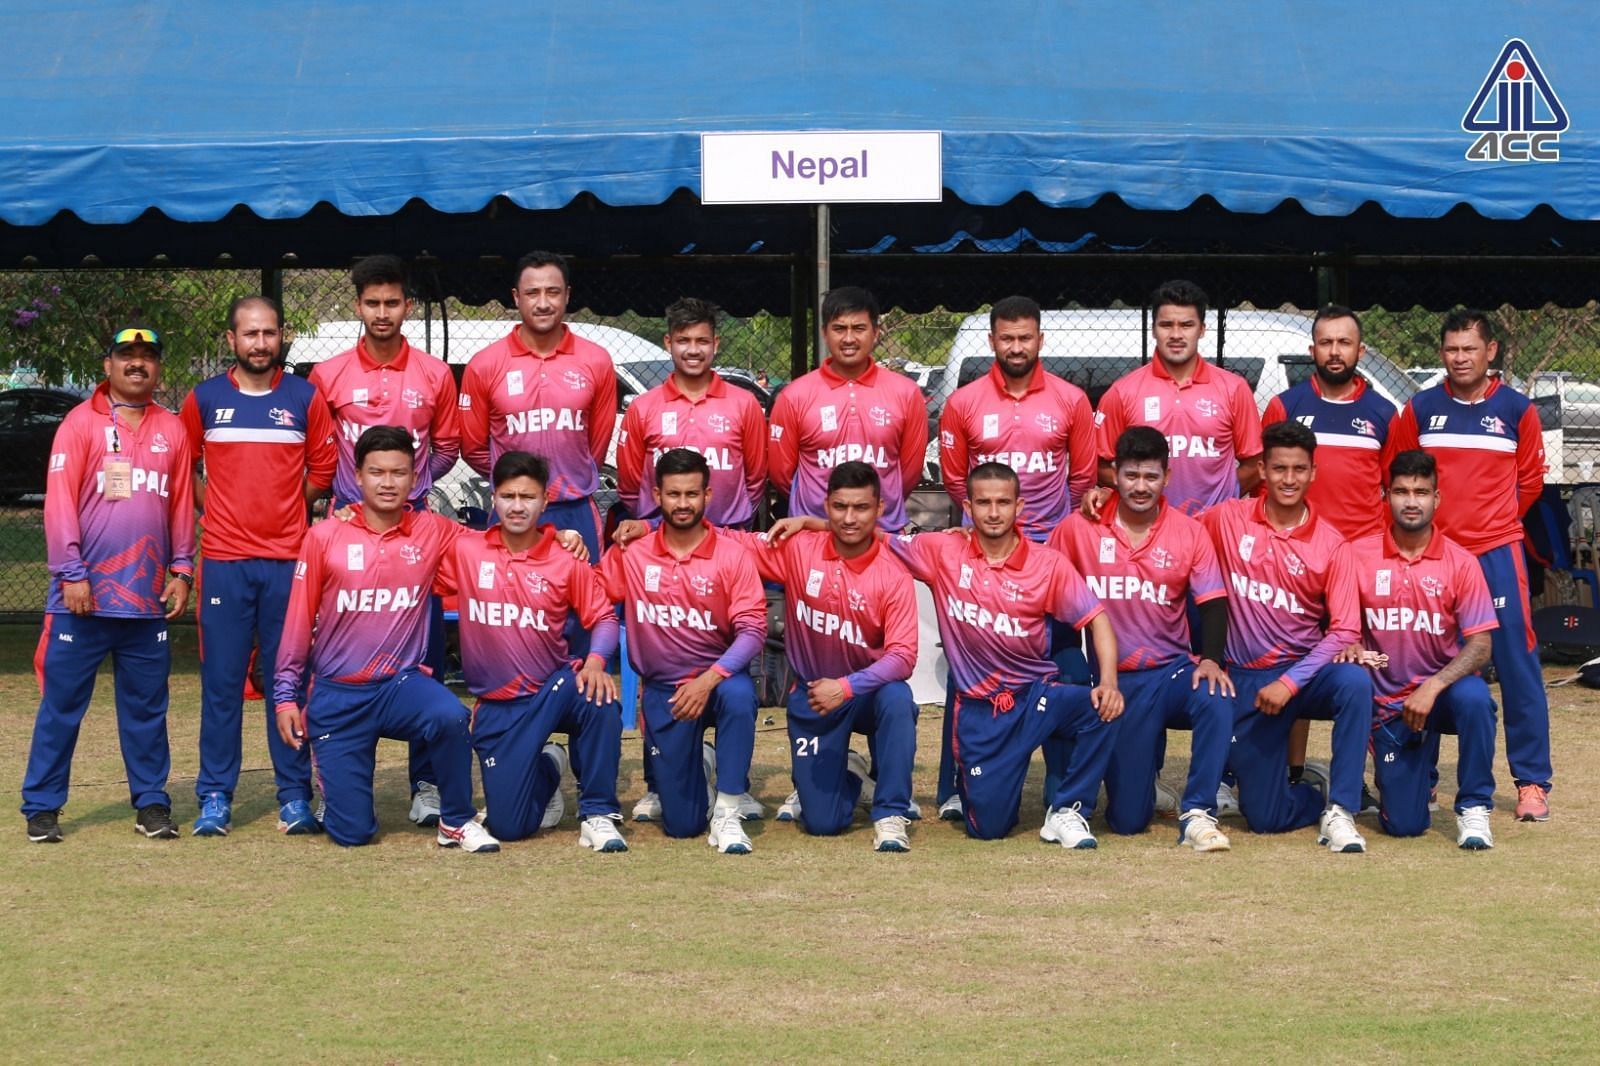 Nepal Cricket Team, Image Courtesy: Twitter/ACC